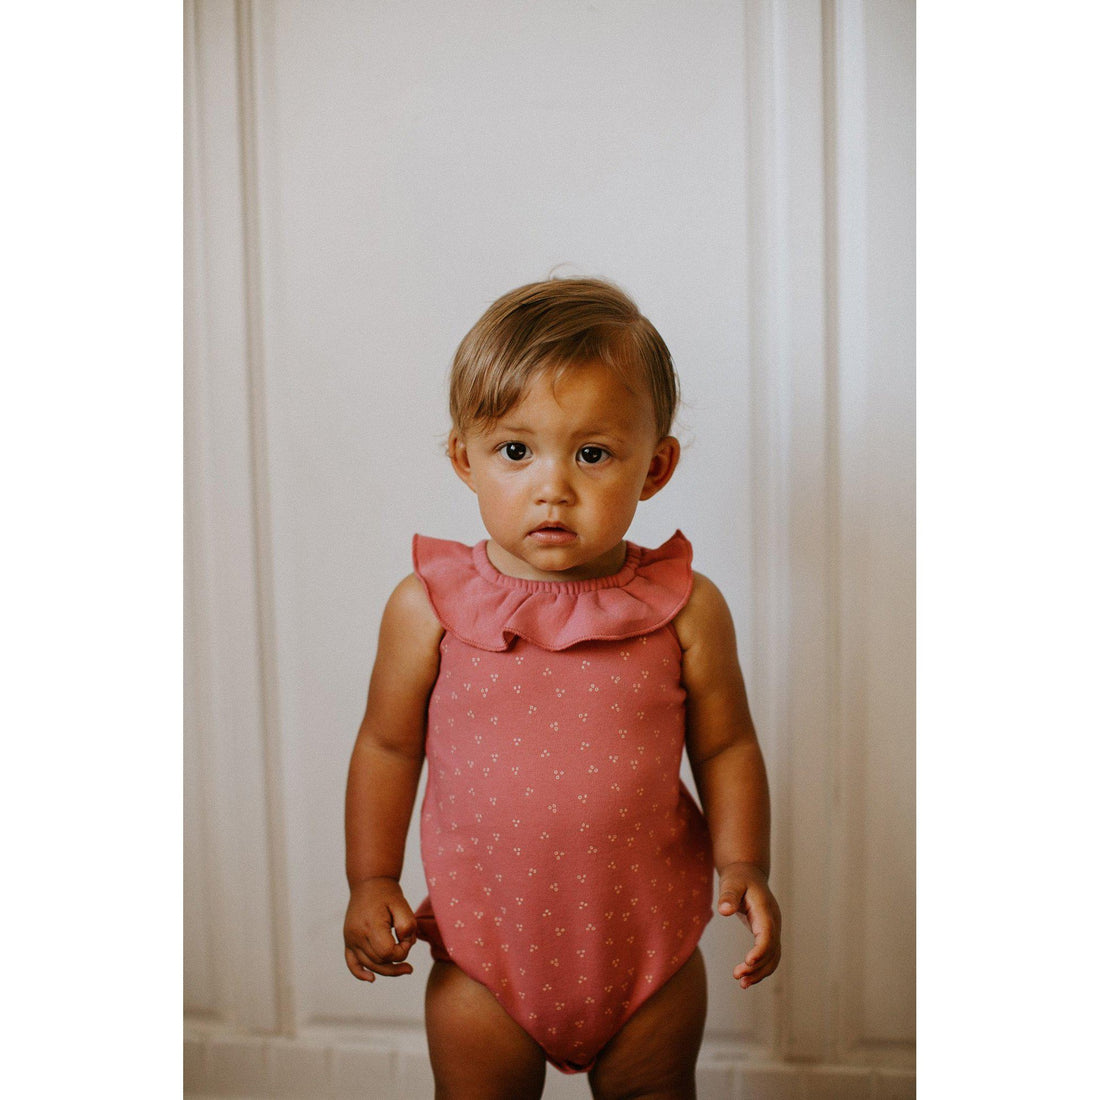 Organic Sleeveless Ruffle Bodysuit-Bodysuits-Loved Baby-0-3 M-Rosewater Dots-bluebird baby & kids